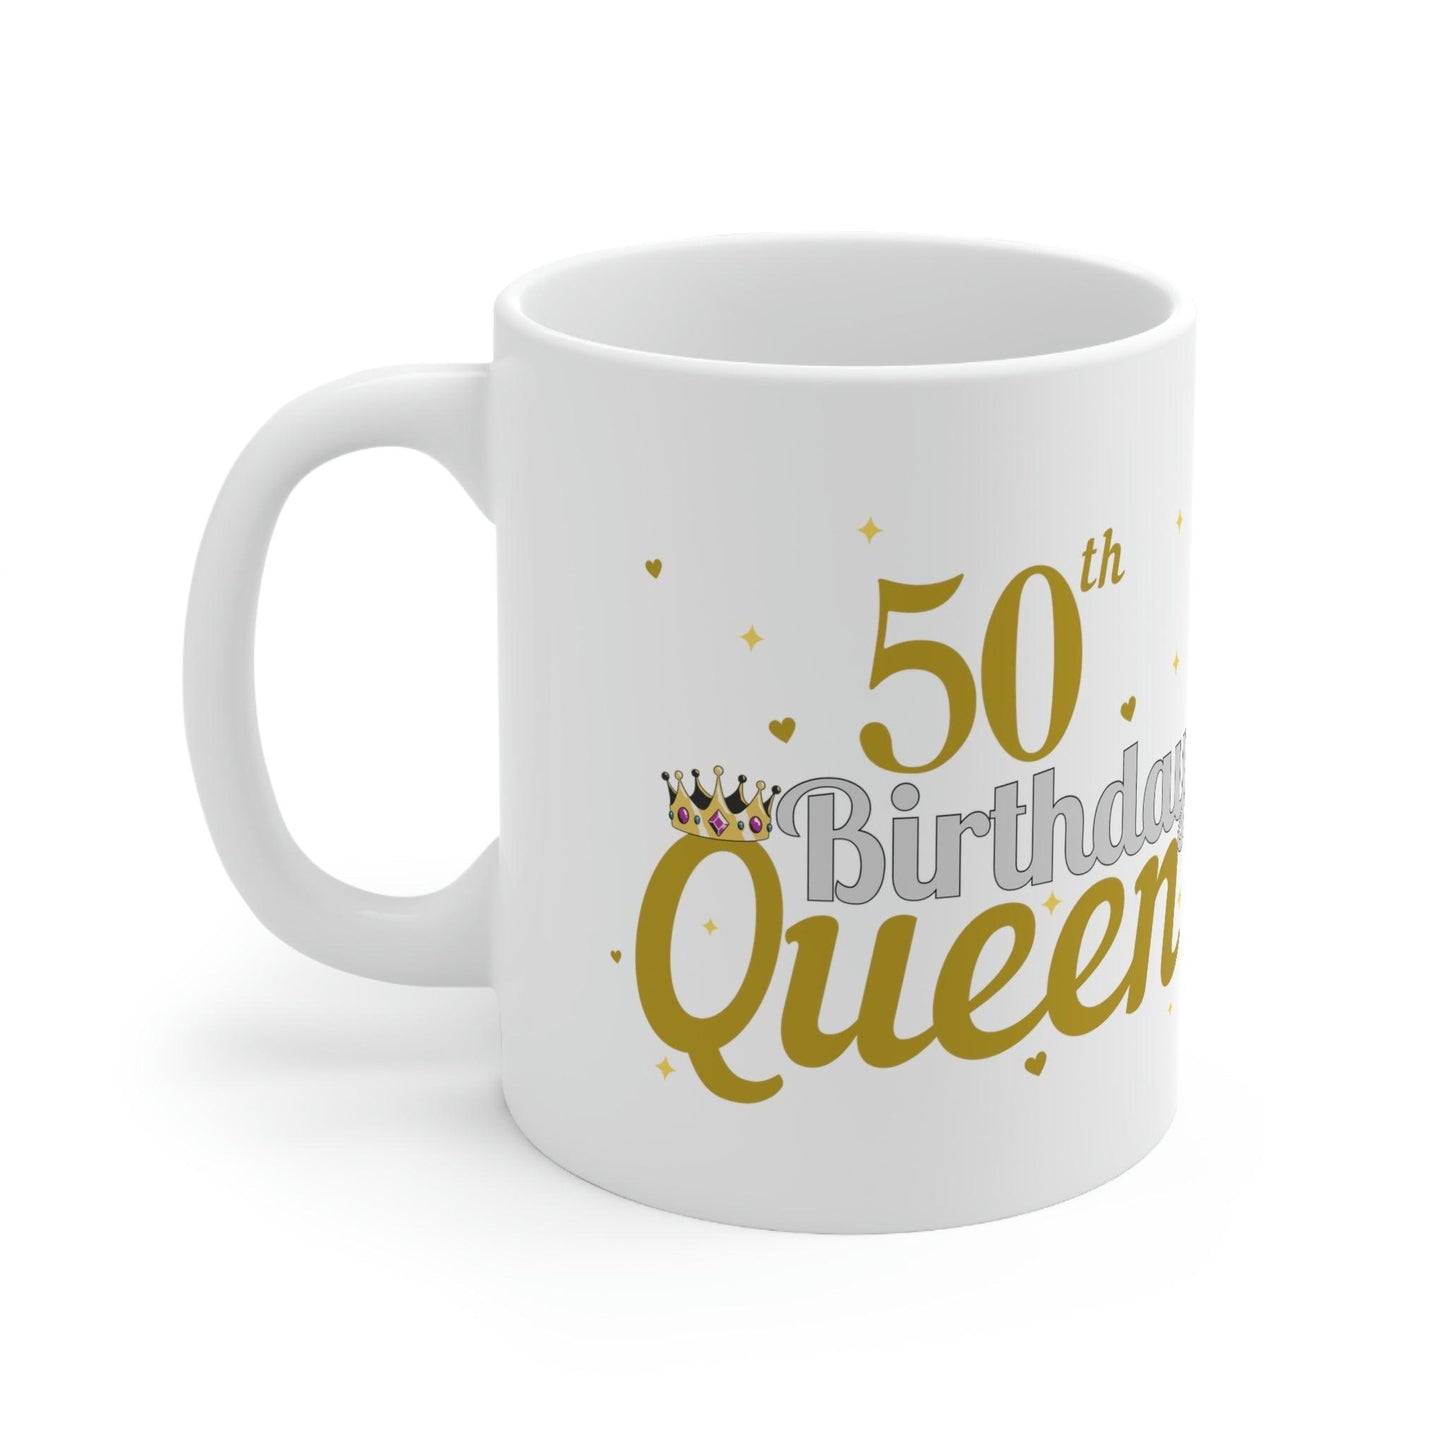 50th birthday queen Mug, gift for mom, Birthday gift for mom, birthday mug, coffee mug for her, hot cocoa mug, gift for coffee lover